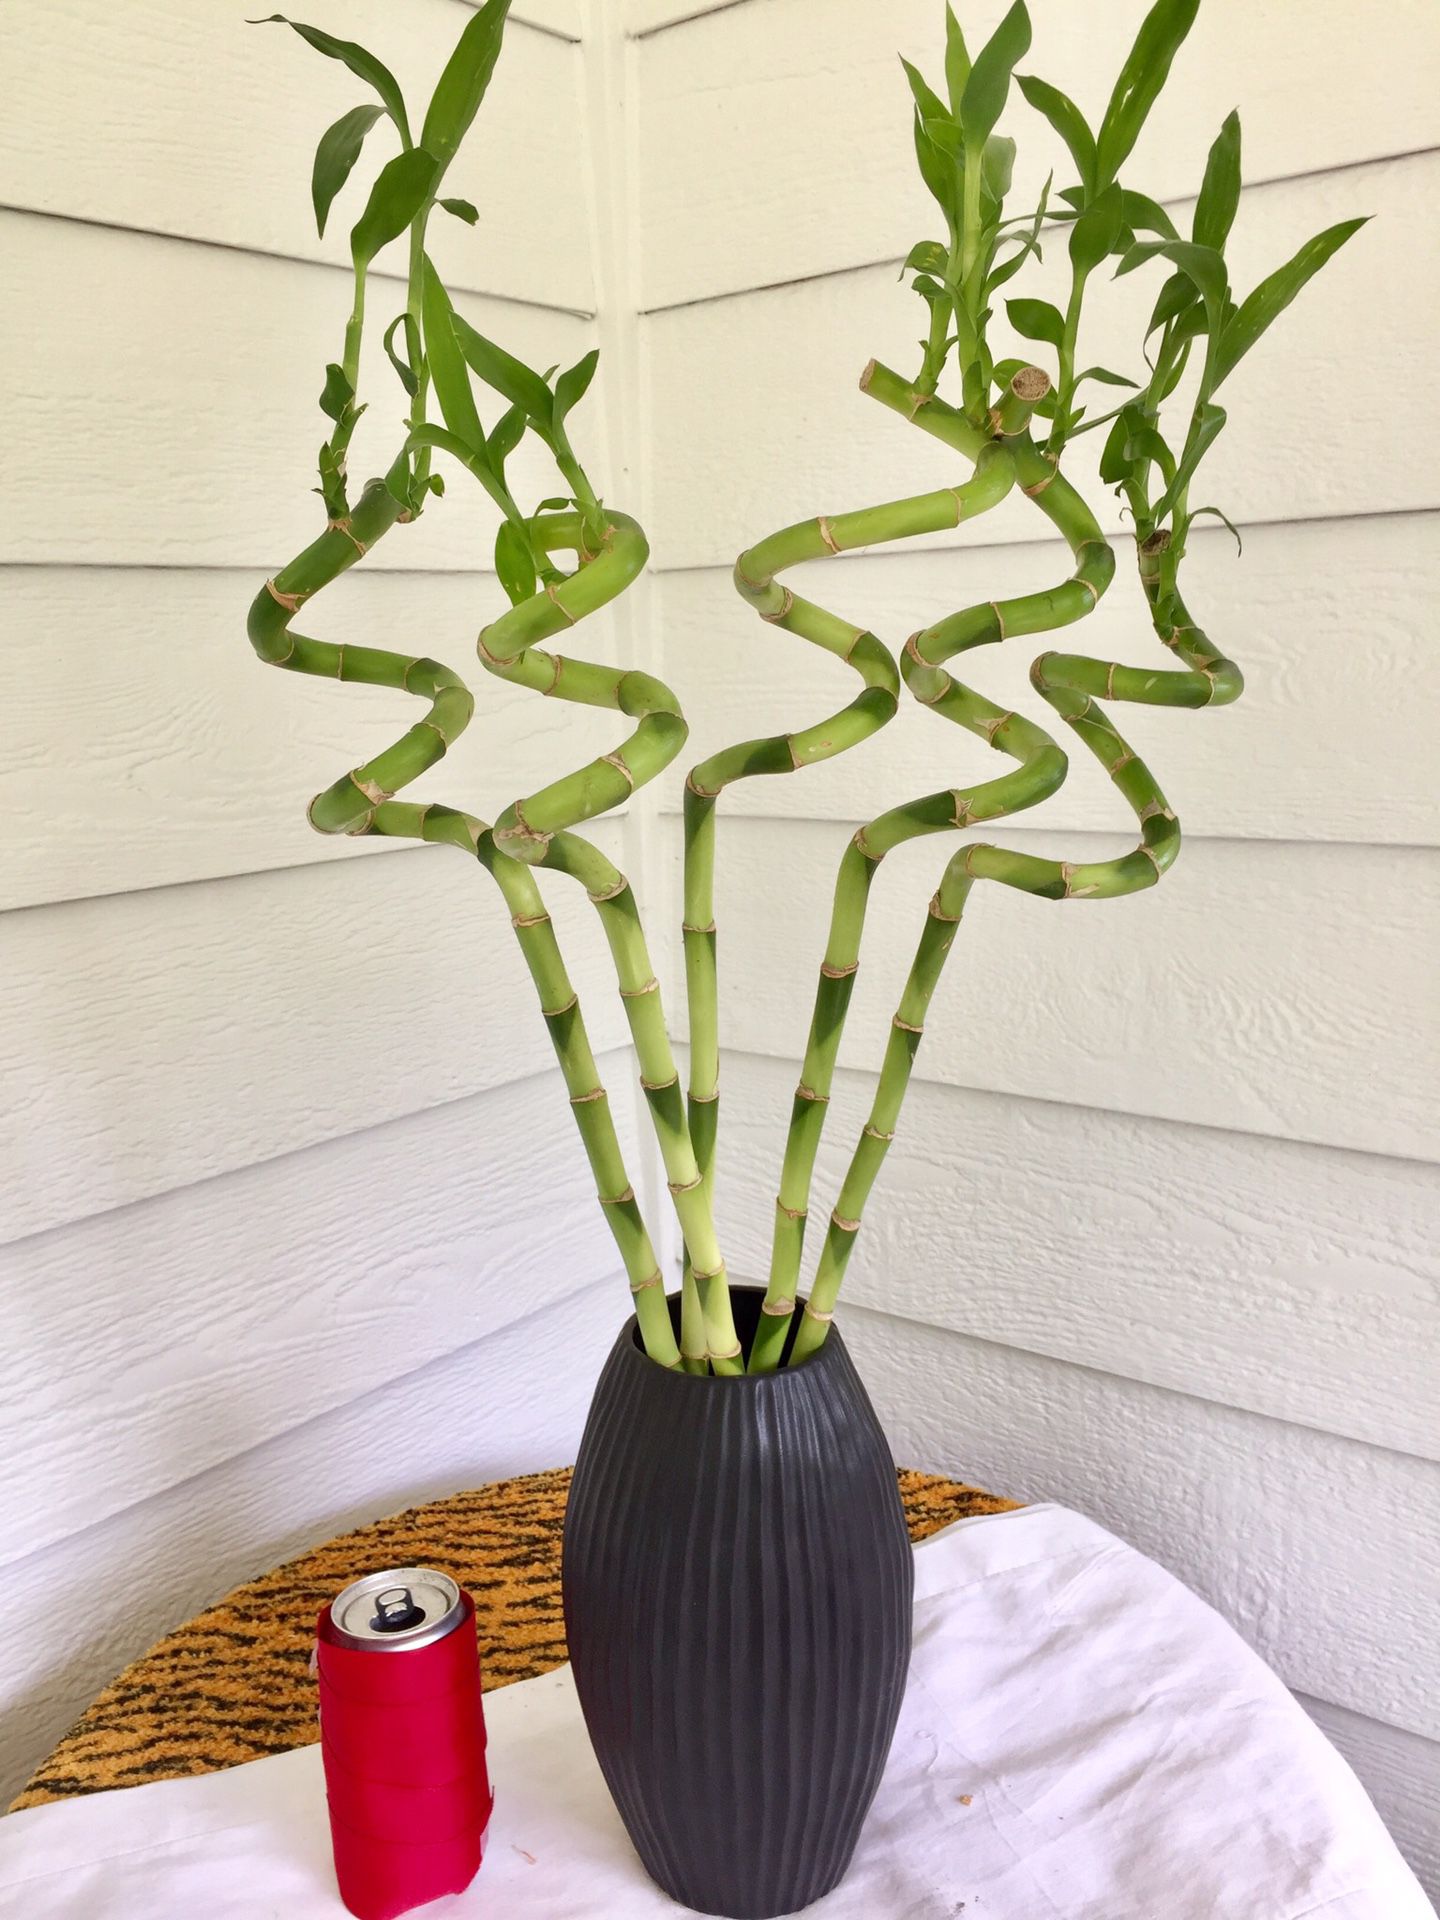 Real Indoor Houseplant - 5 Spiral Dracaena Lucky Bamboo Plants in Black Ceramic Planter Pot/ Vase